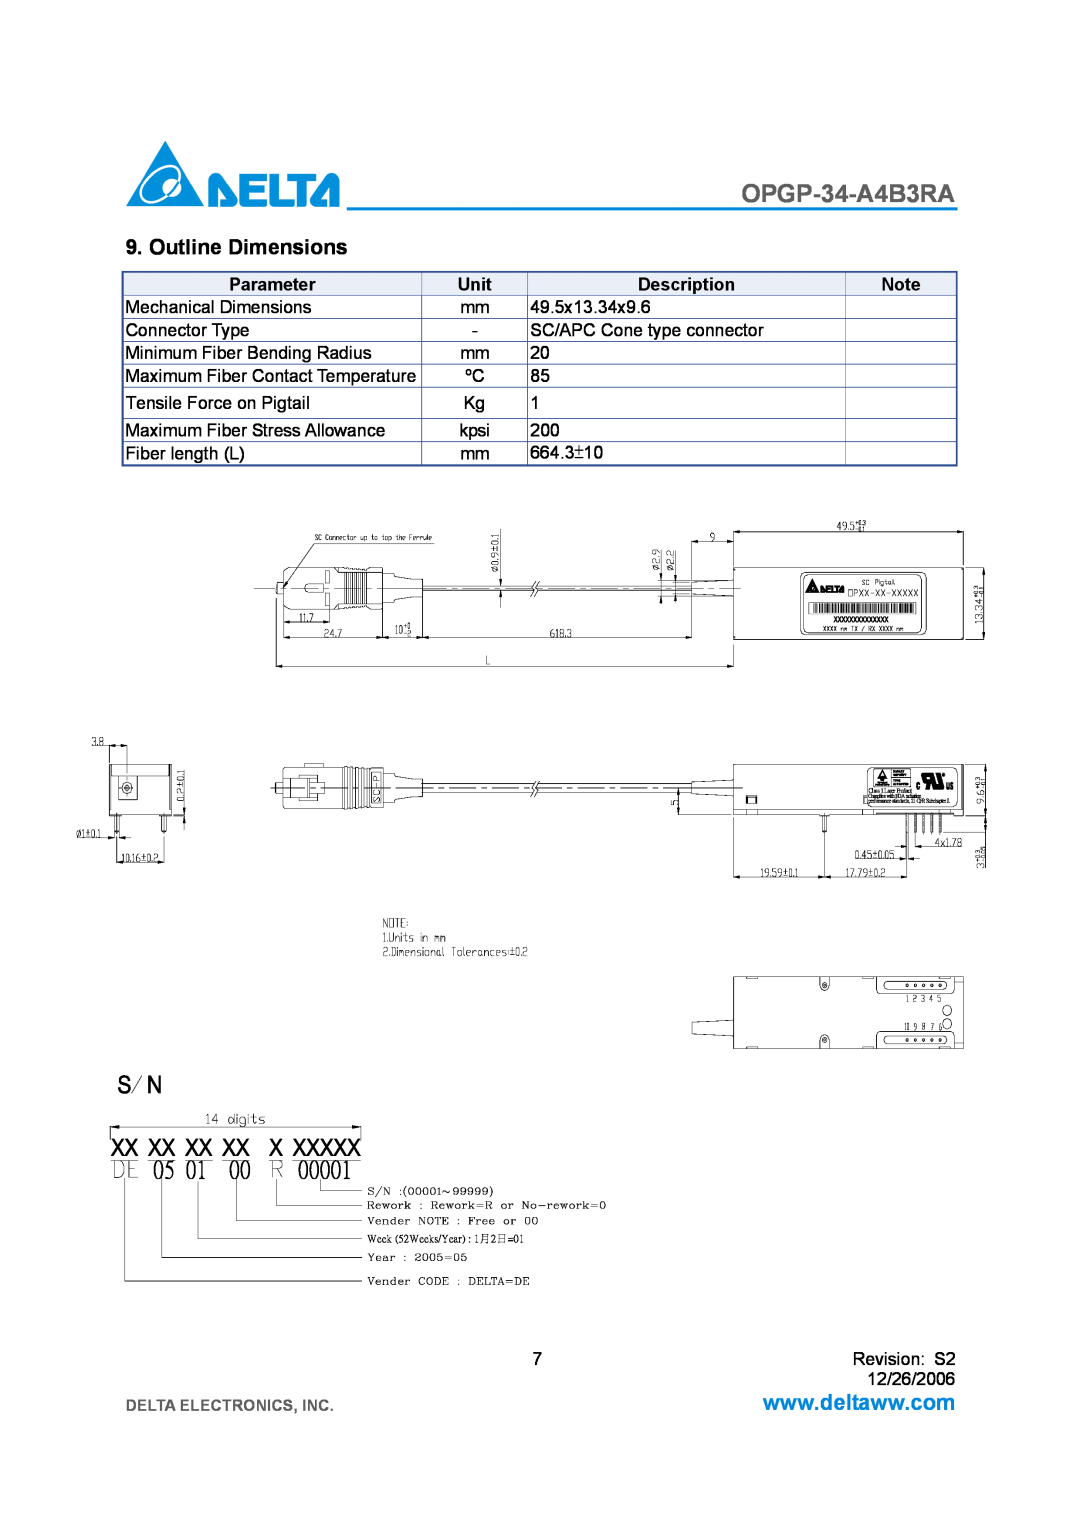 Delta Electronics OPGP-34-A4B3RA manual Outline Dimensions, kpsi 